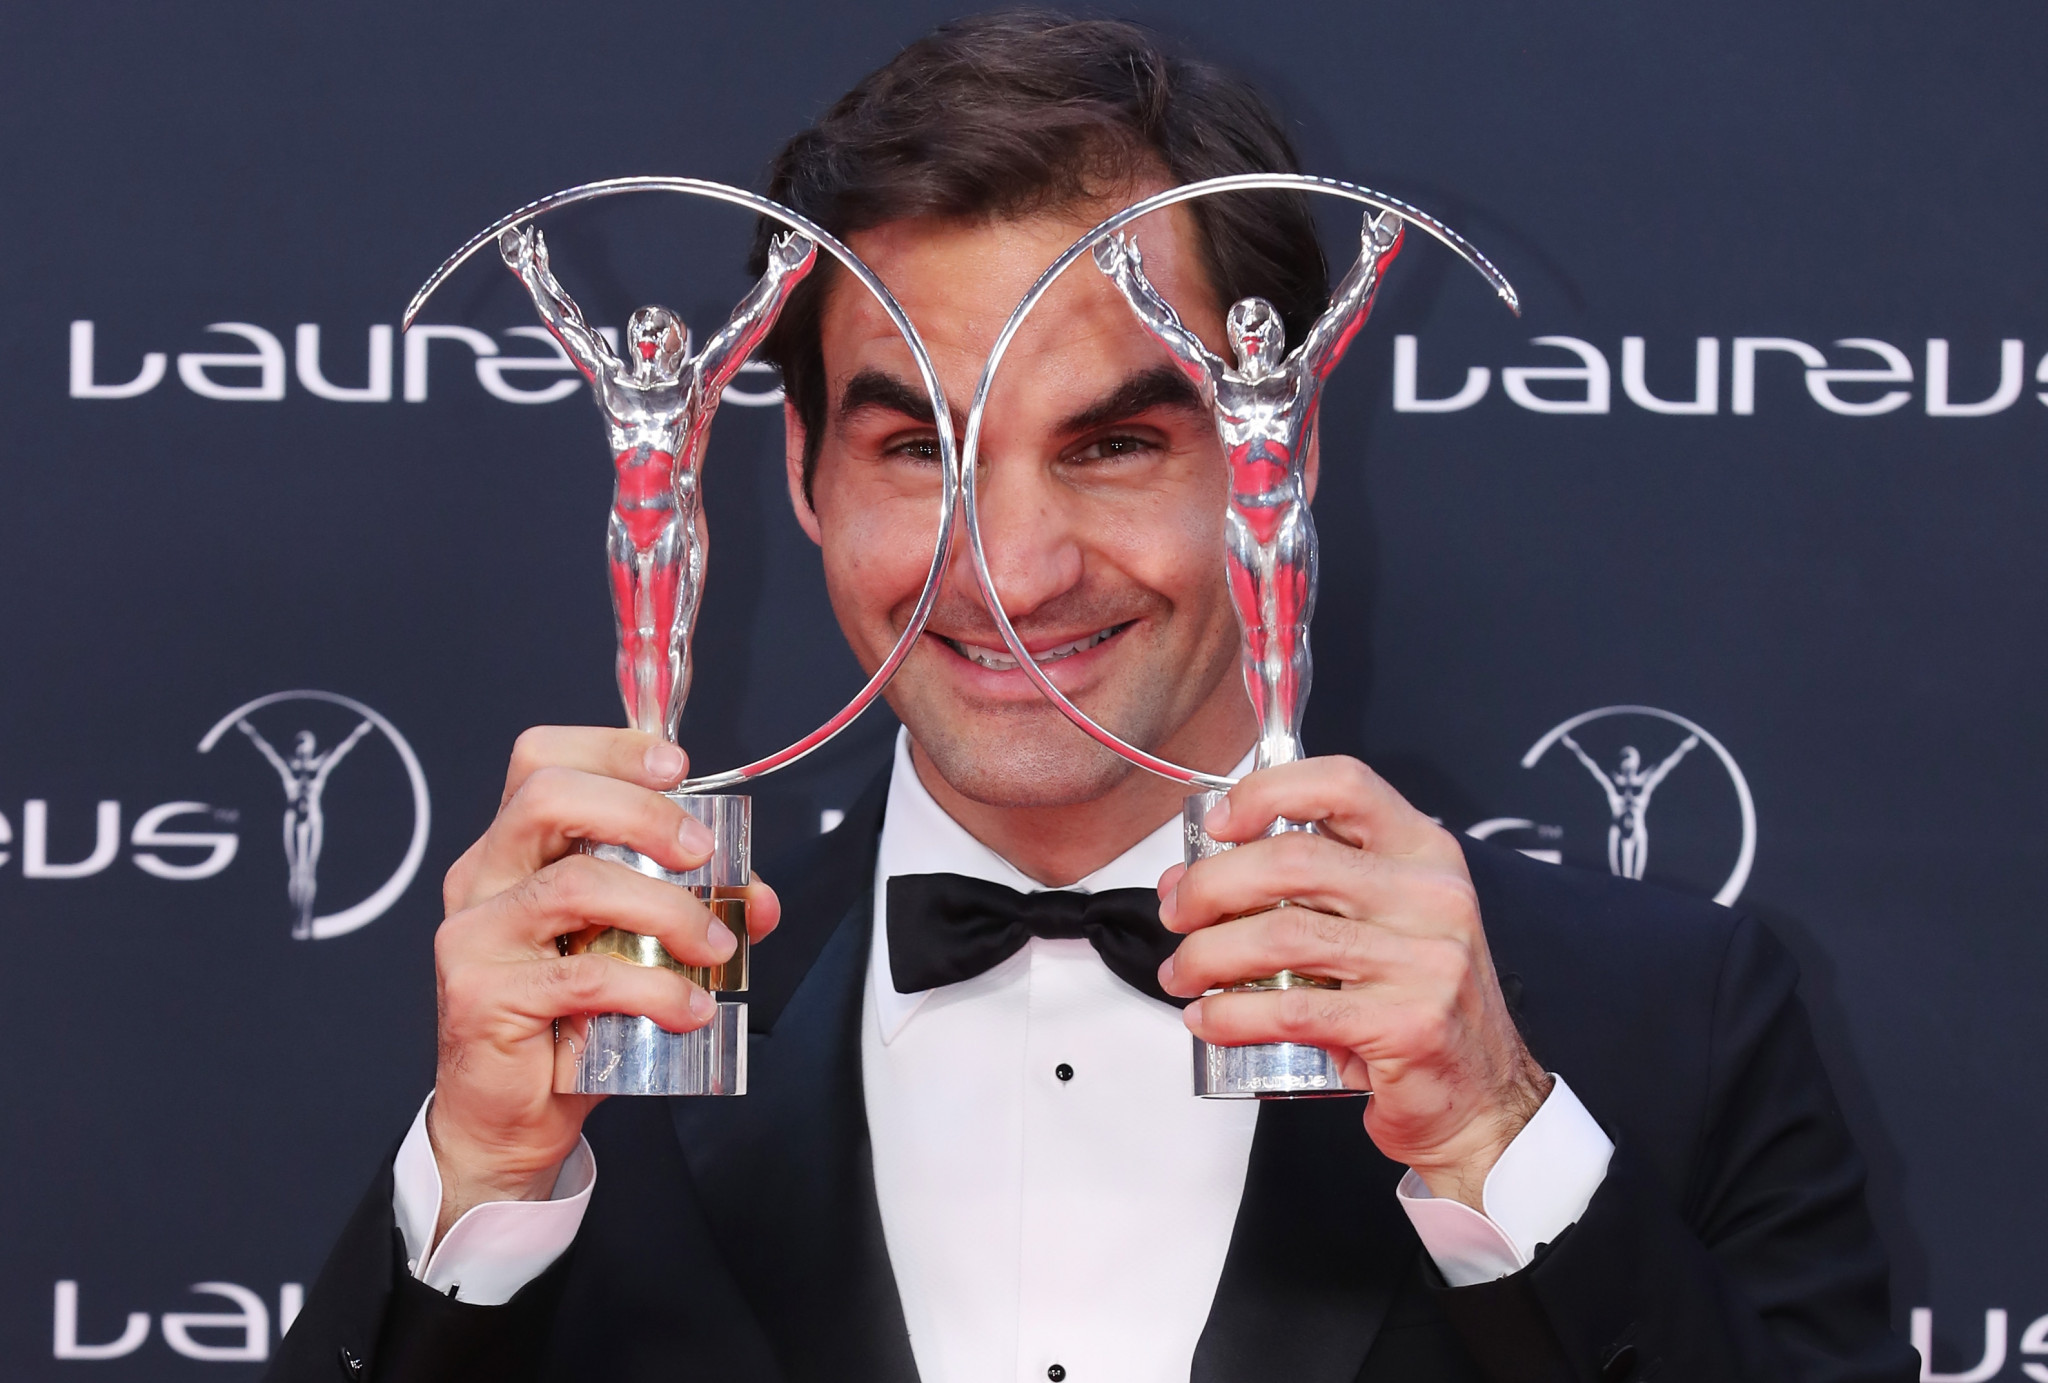 Two more awards make Federer most feted sportsperson in Laureus history